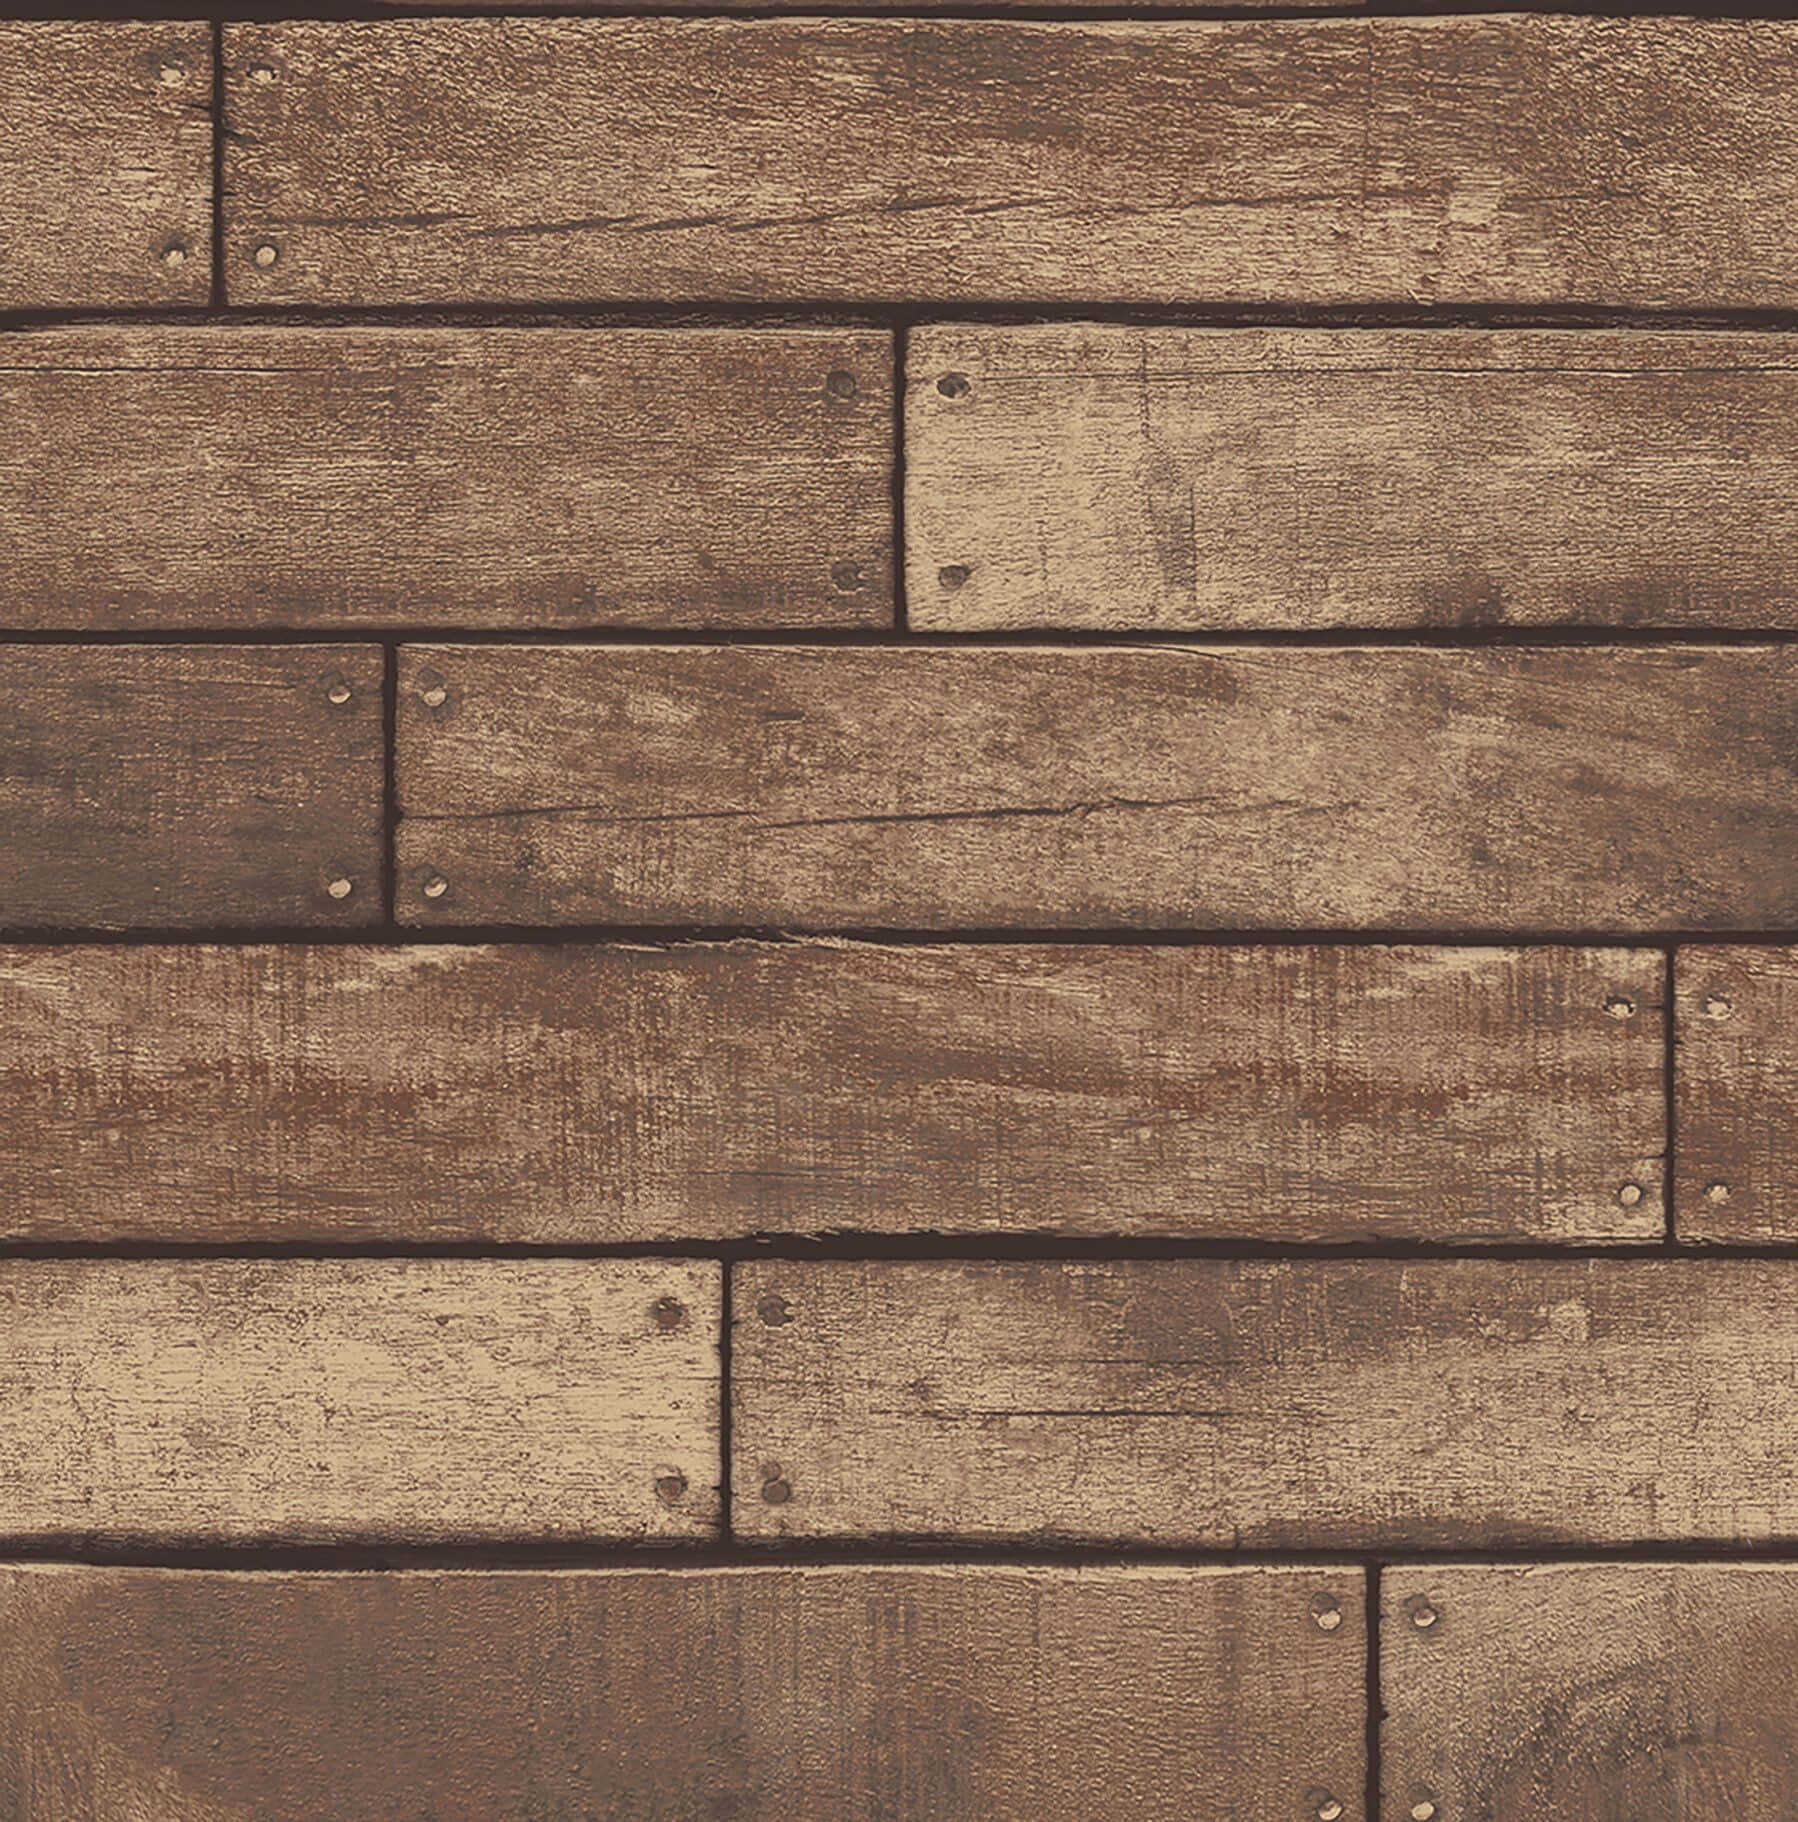 Nailed Floorboards Wooden Background Design